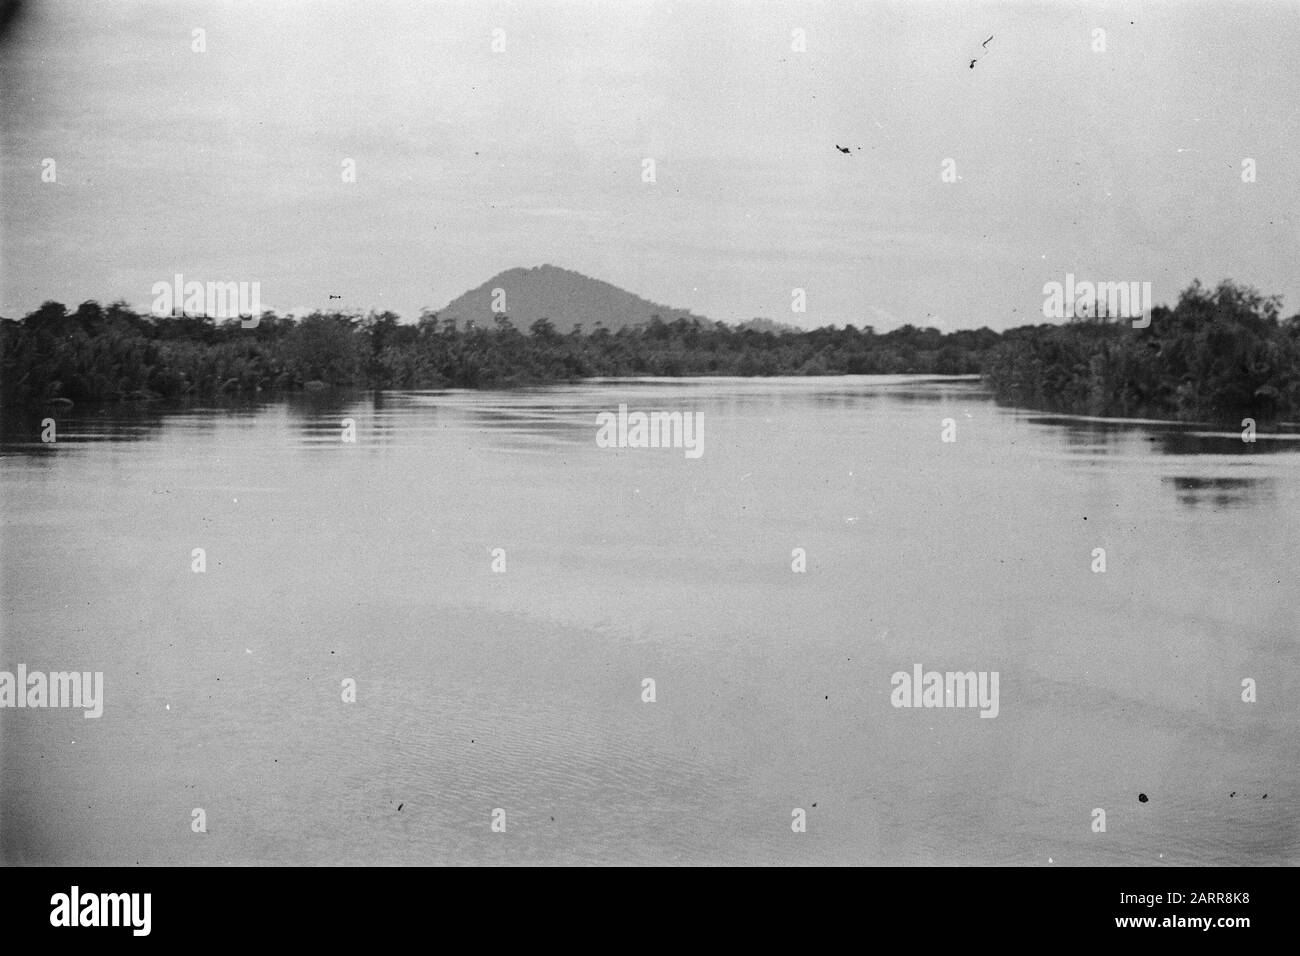 Borneo  River Date: February 1947 Location: Borneo, Indonesia, Kalimantan, Dutch East Indies Stock Photo